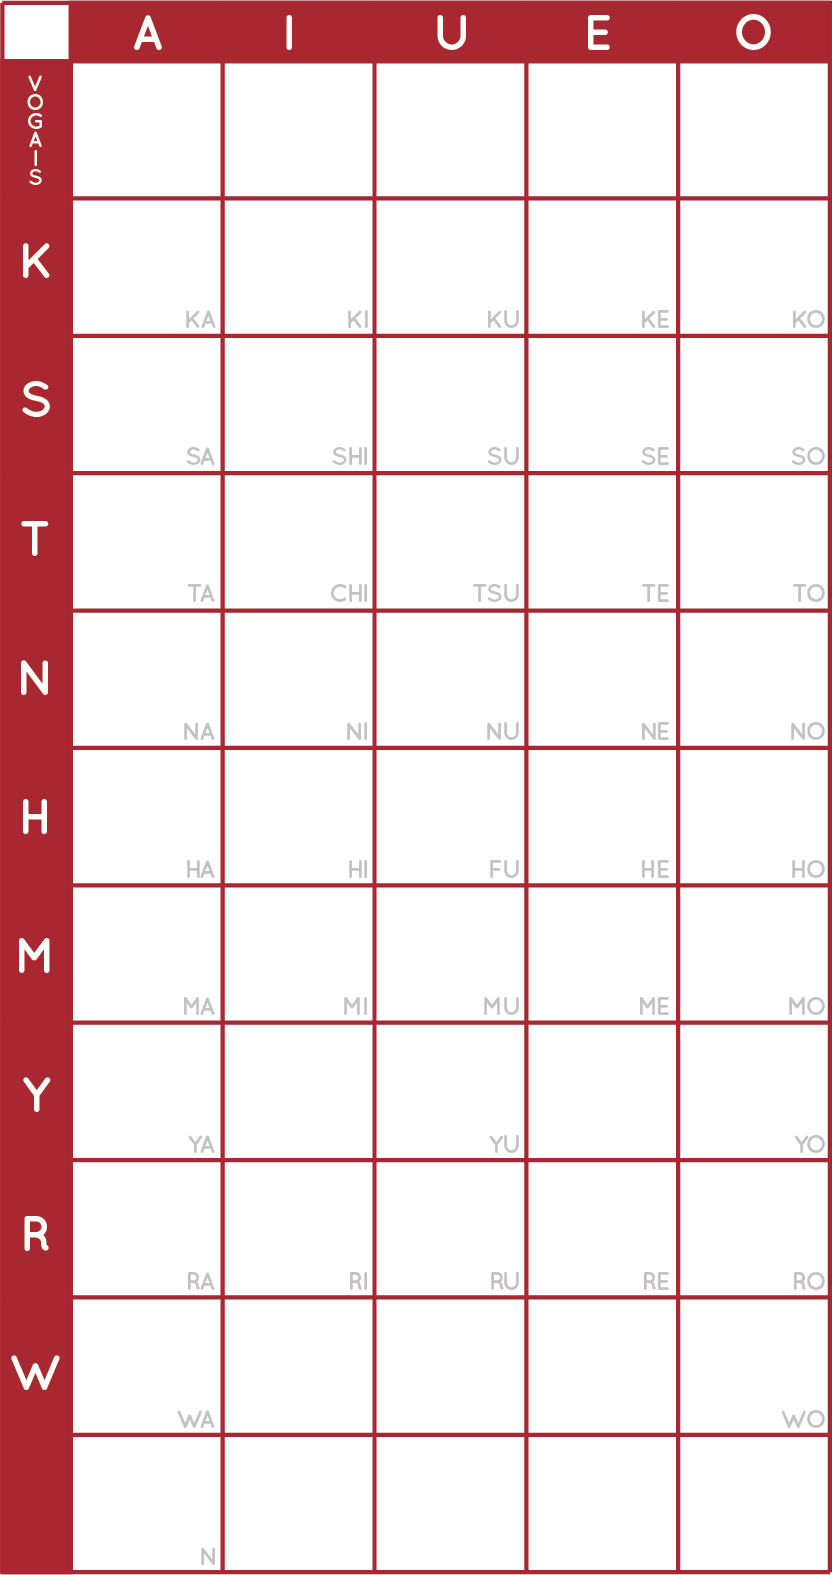 Tabela katakana